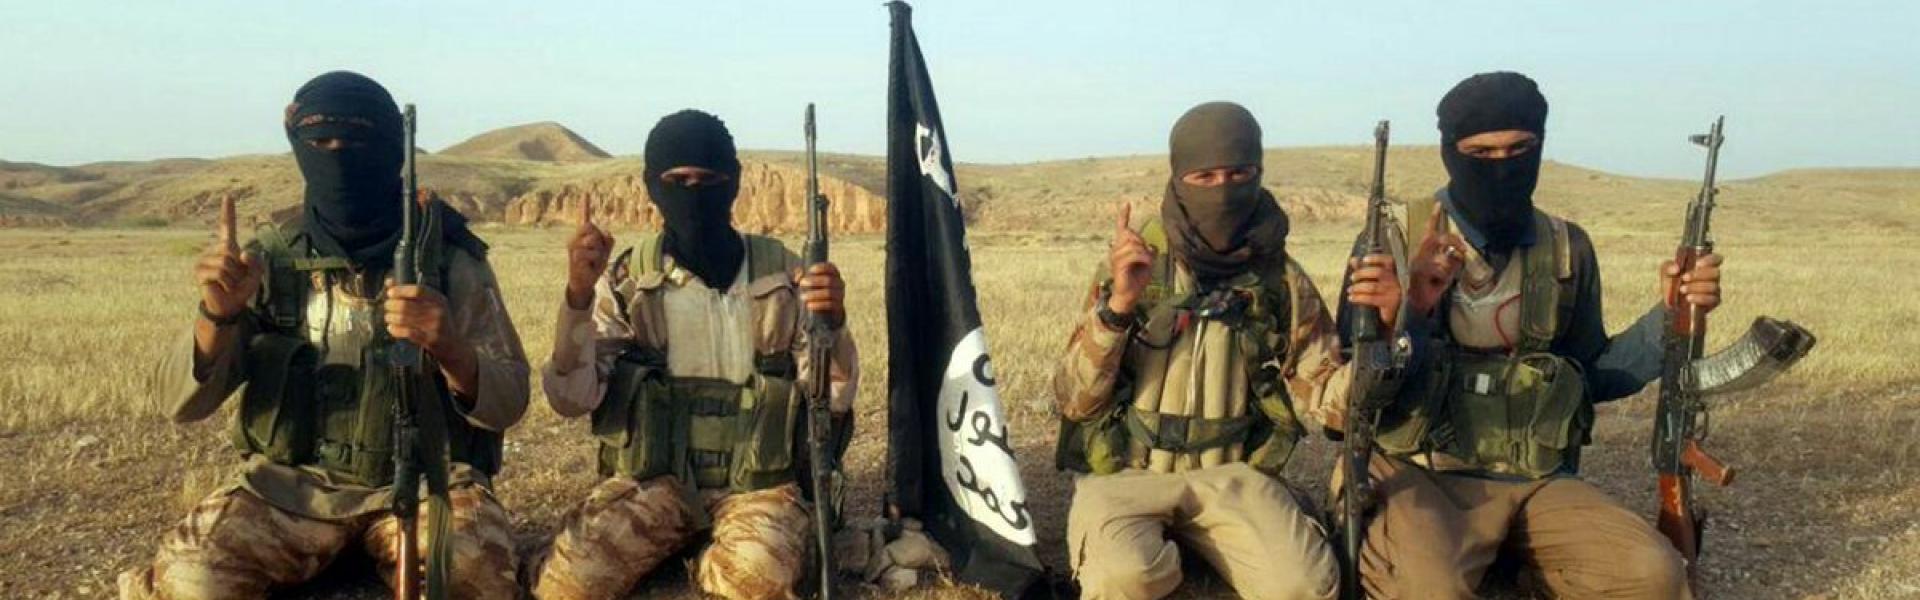 H Toυρκία Στρατολογεί Ισλαμιστές Τρομοκράτες του ΙΚ για την Επίθεση Εναντίον των Κούρδων